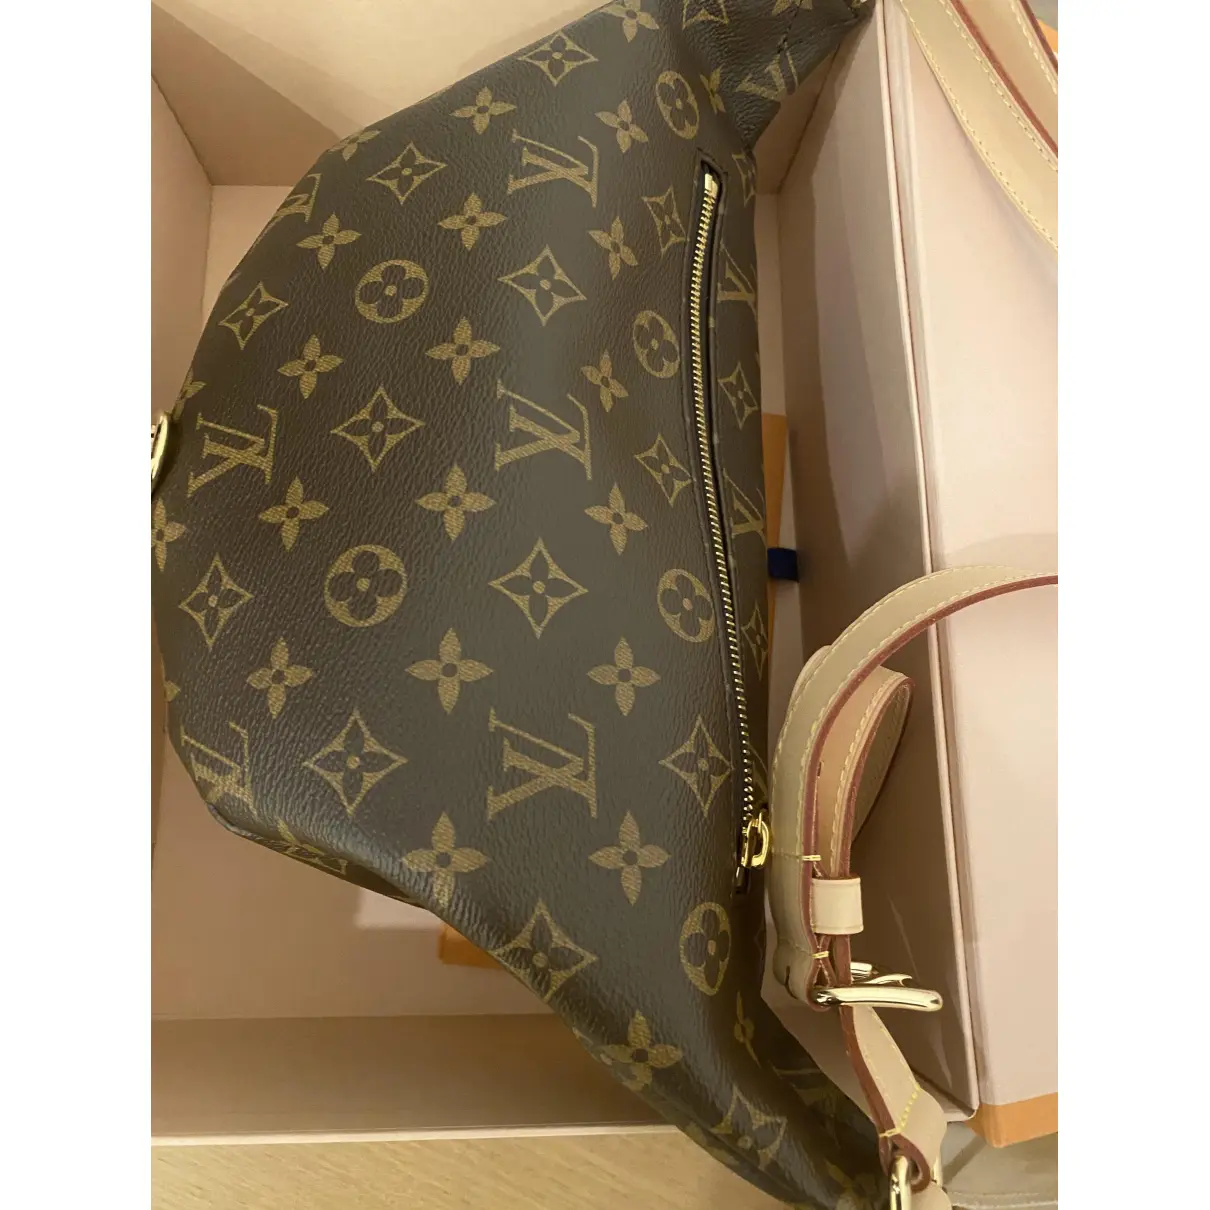 Buy Louis Vuitton Bum Bag / Sac Ceinture cloth handbag online